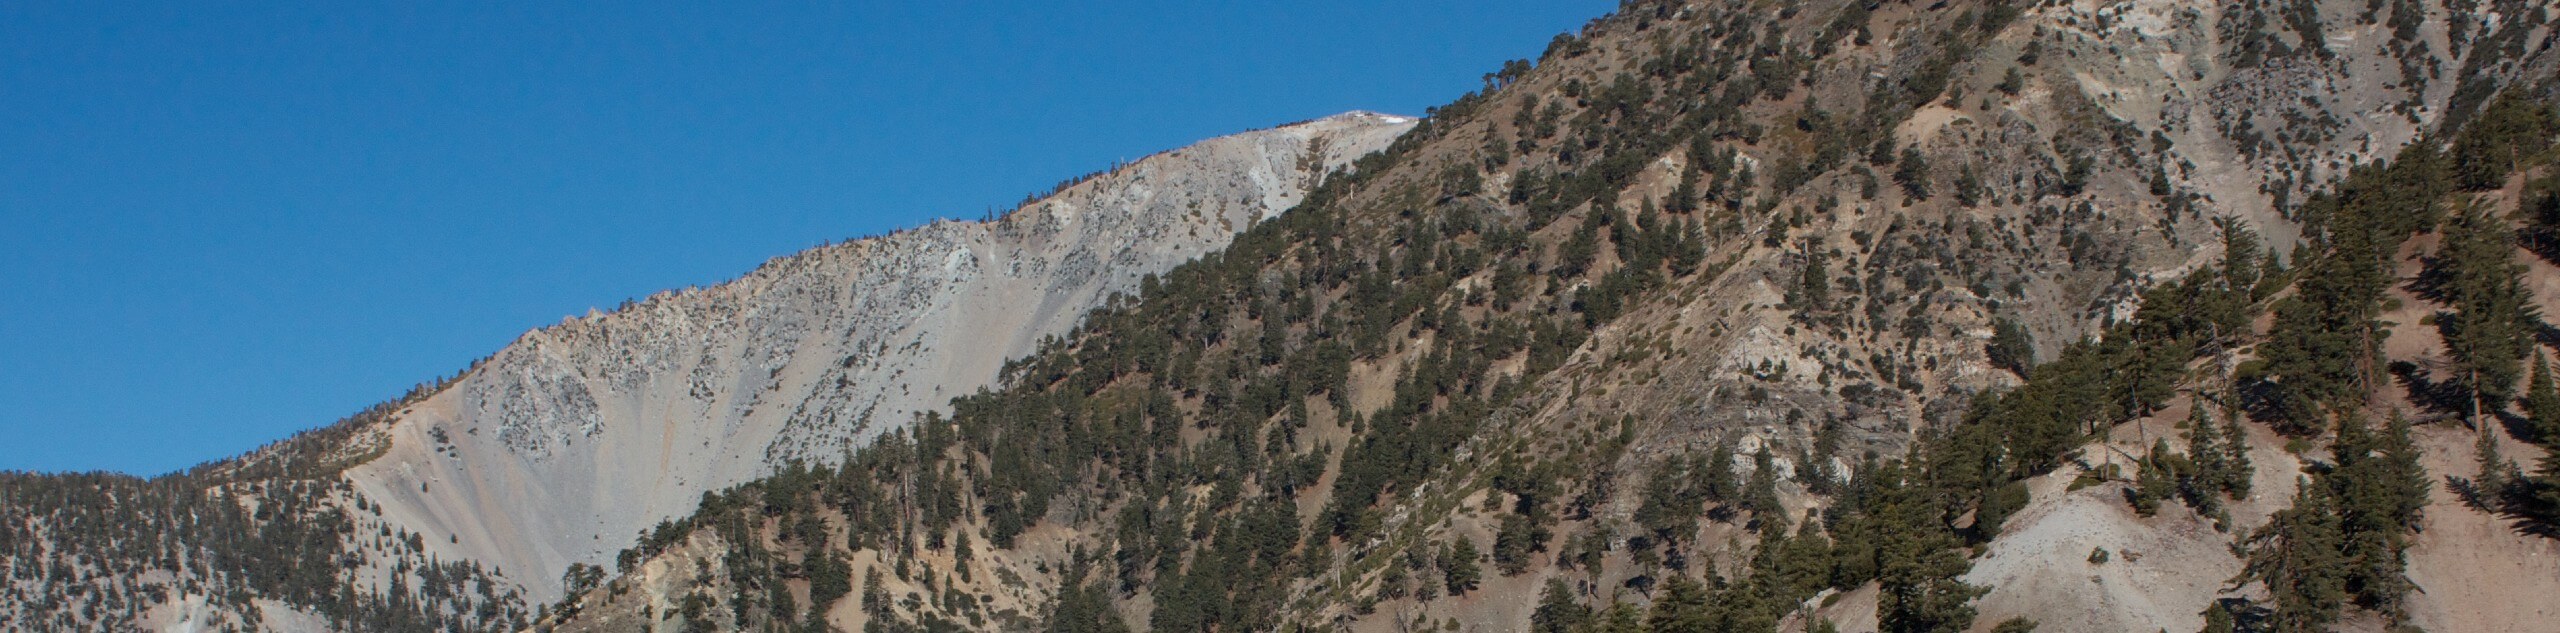 Mount Baldy via Devil’s Backbone Trail